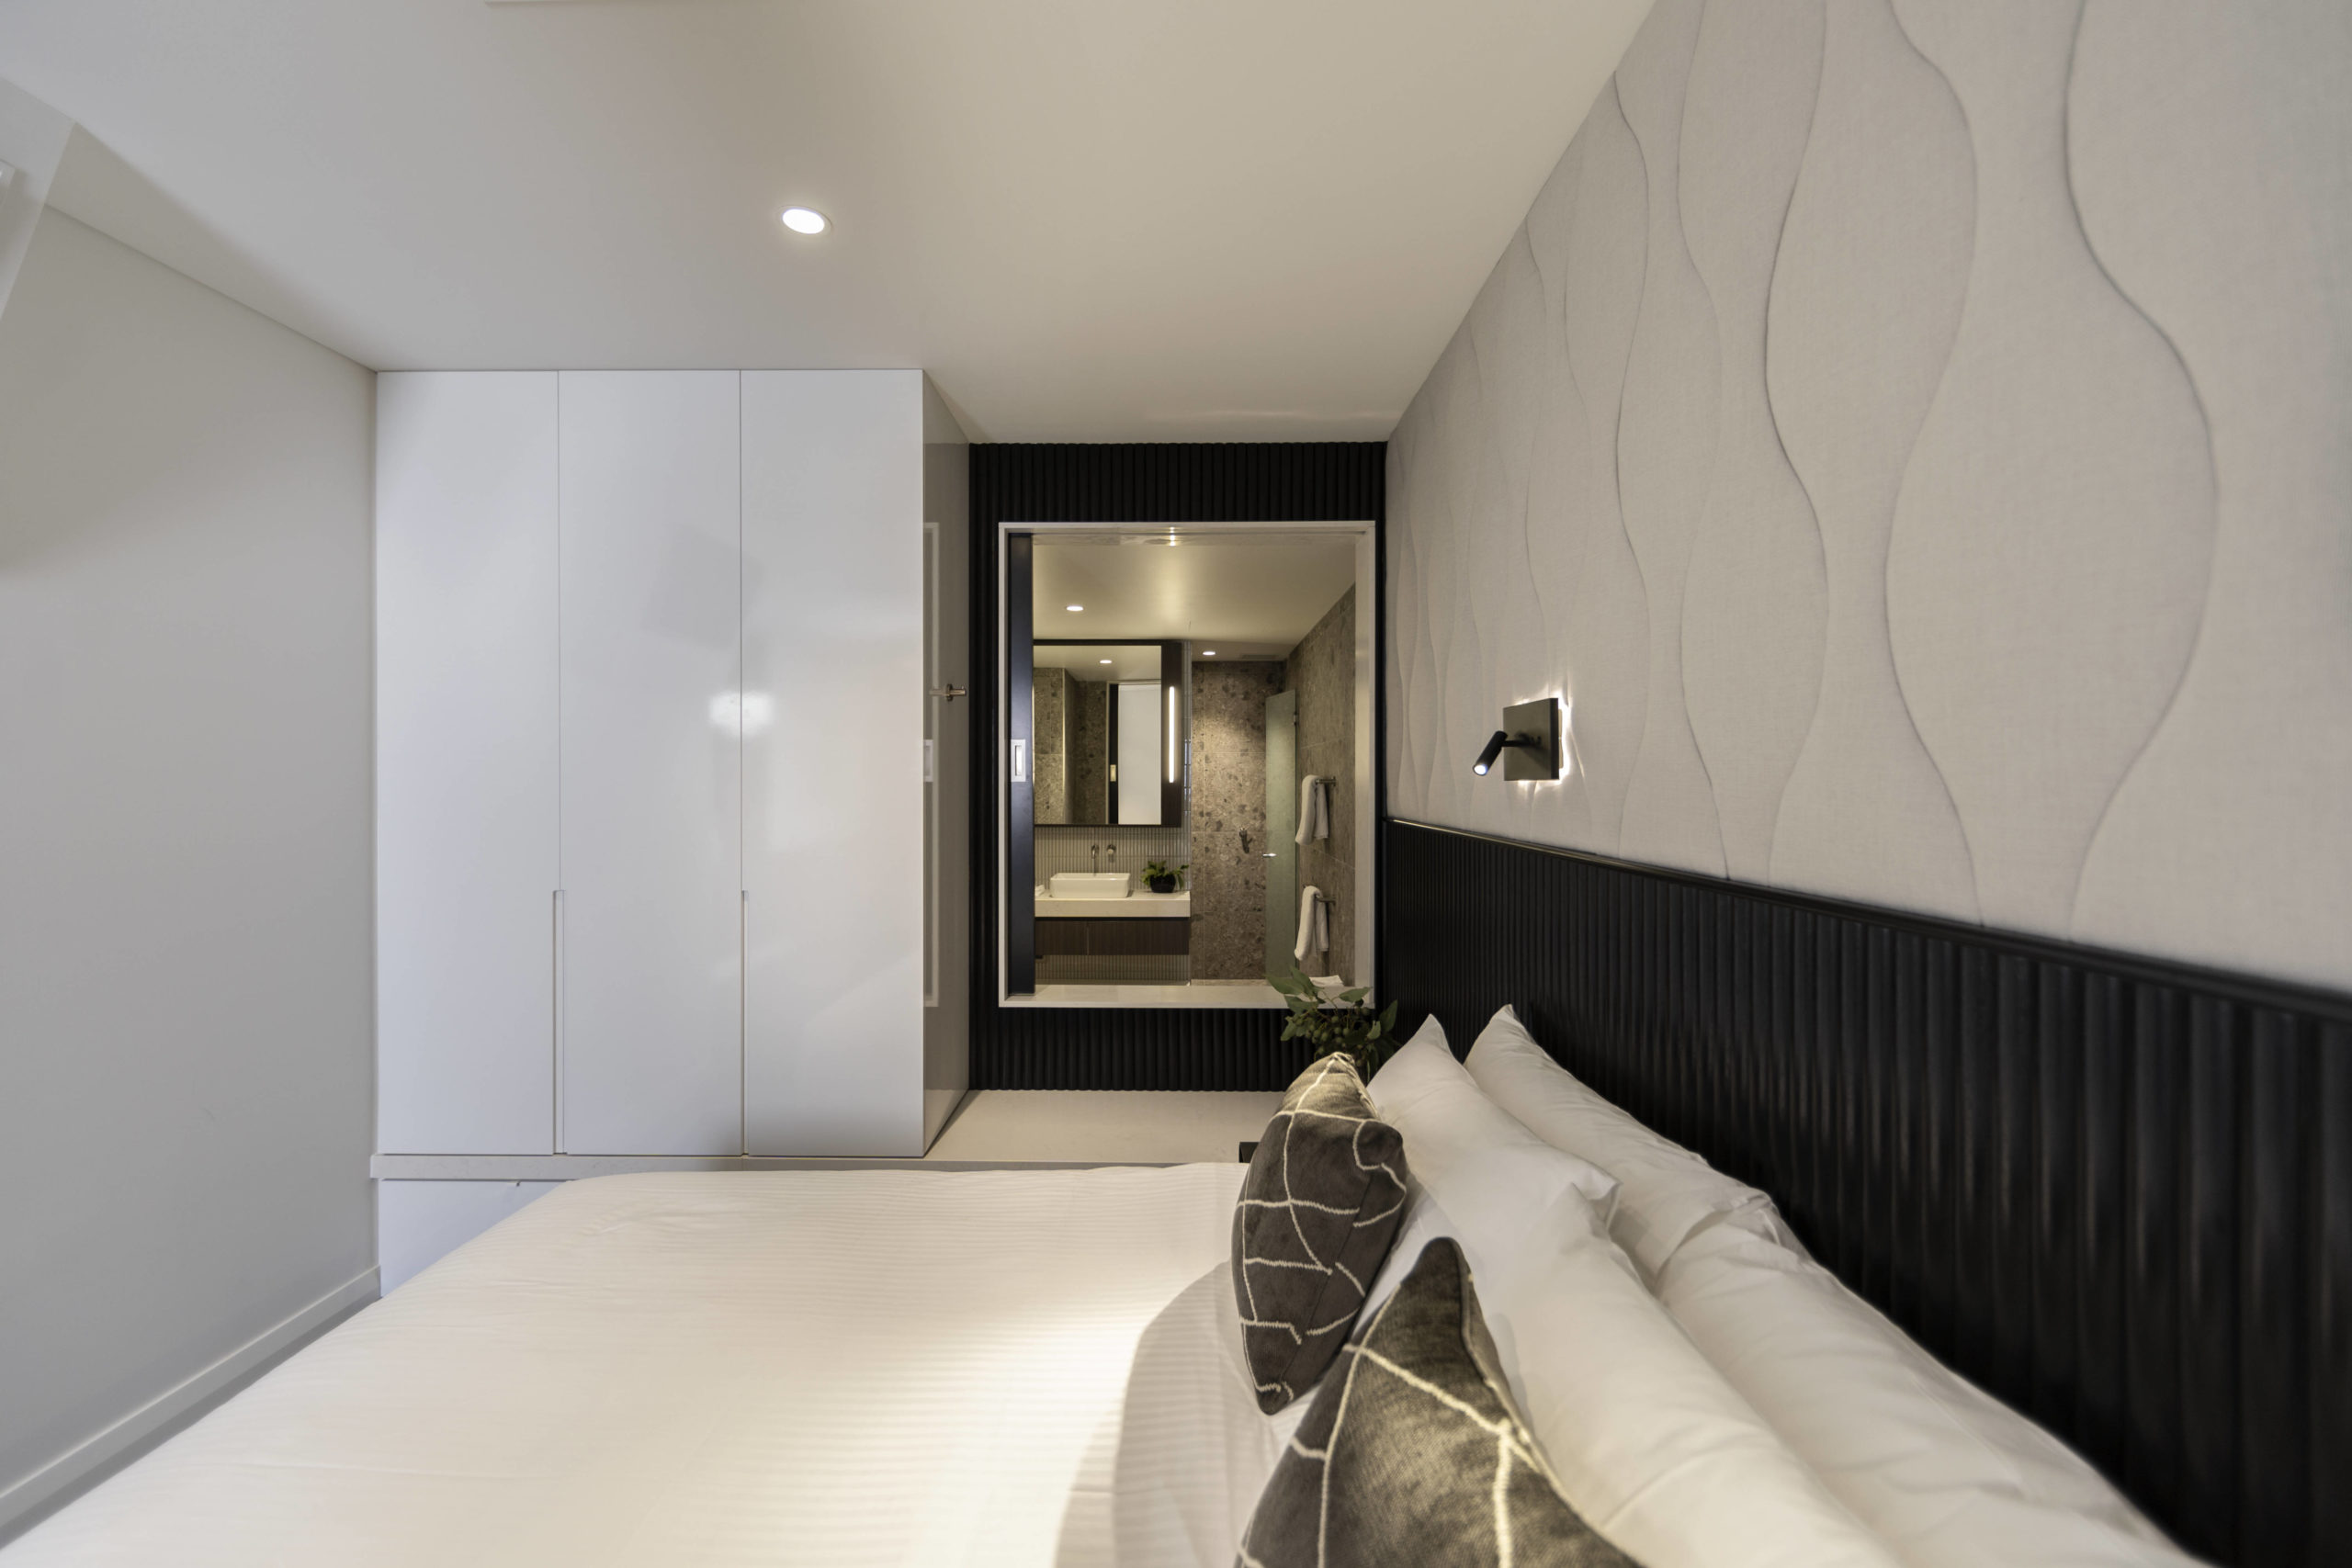 Majestic-M-Suites-One-Bedroom-Suite-Bedroom-and-Bathroom-1-scaled.jpg